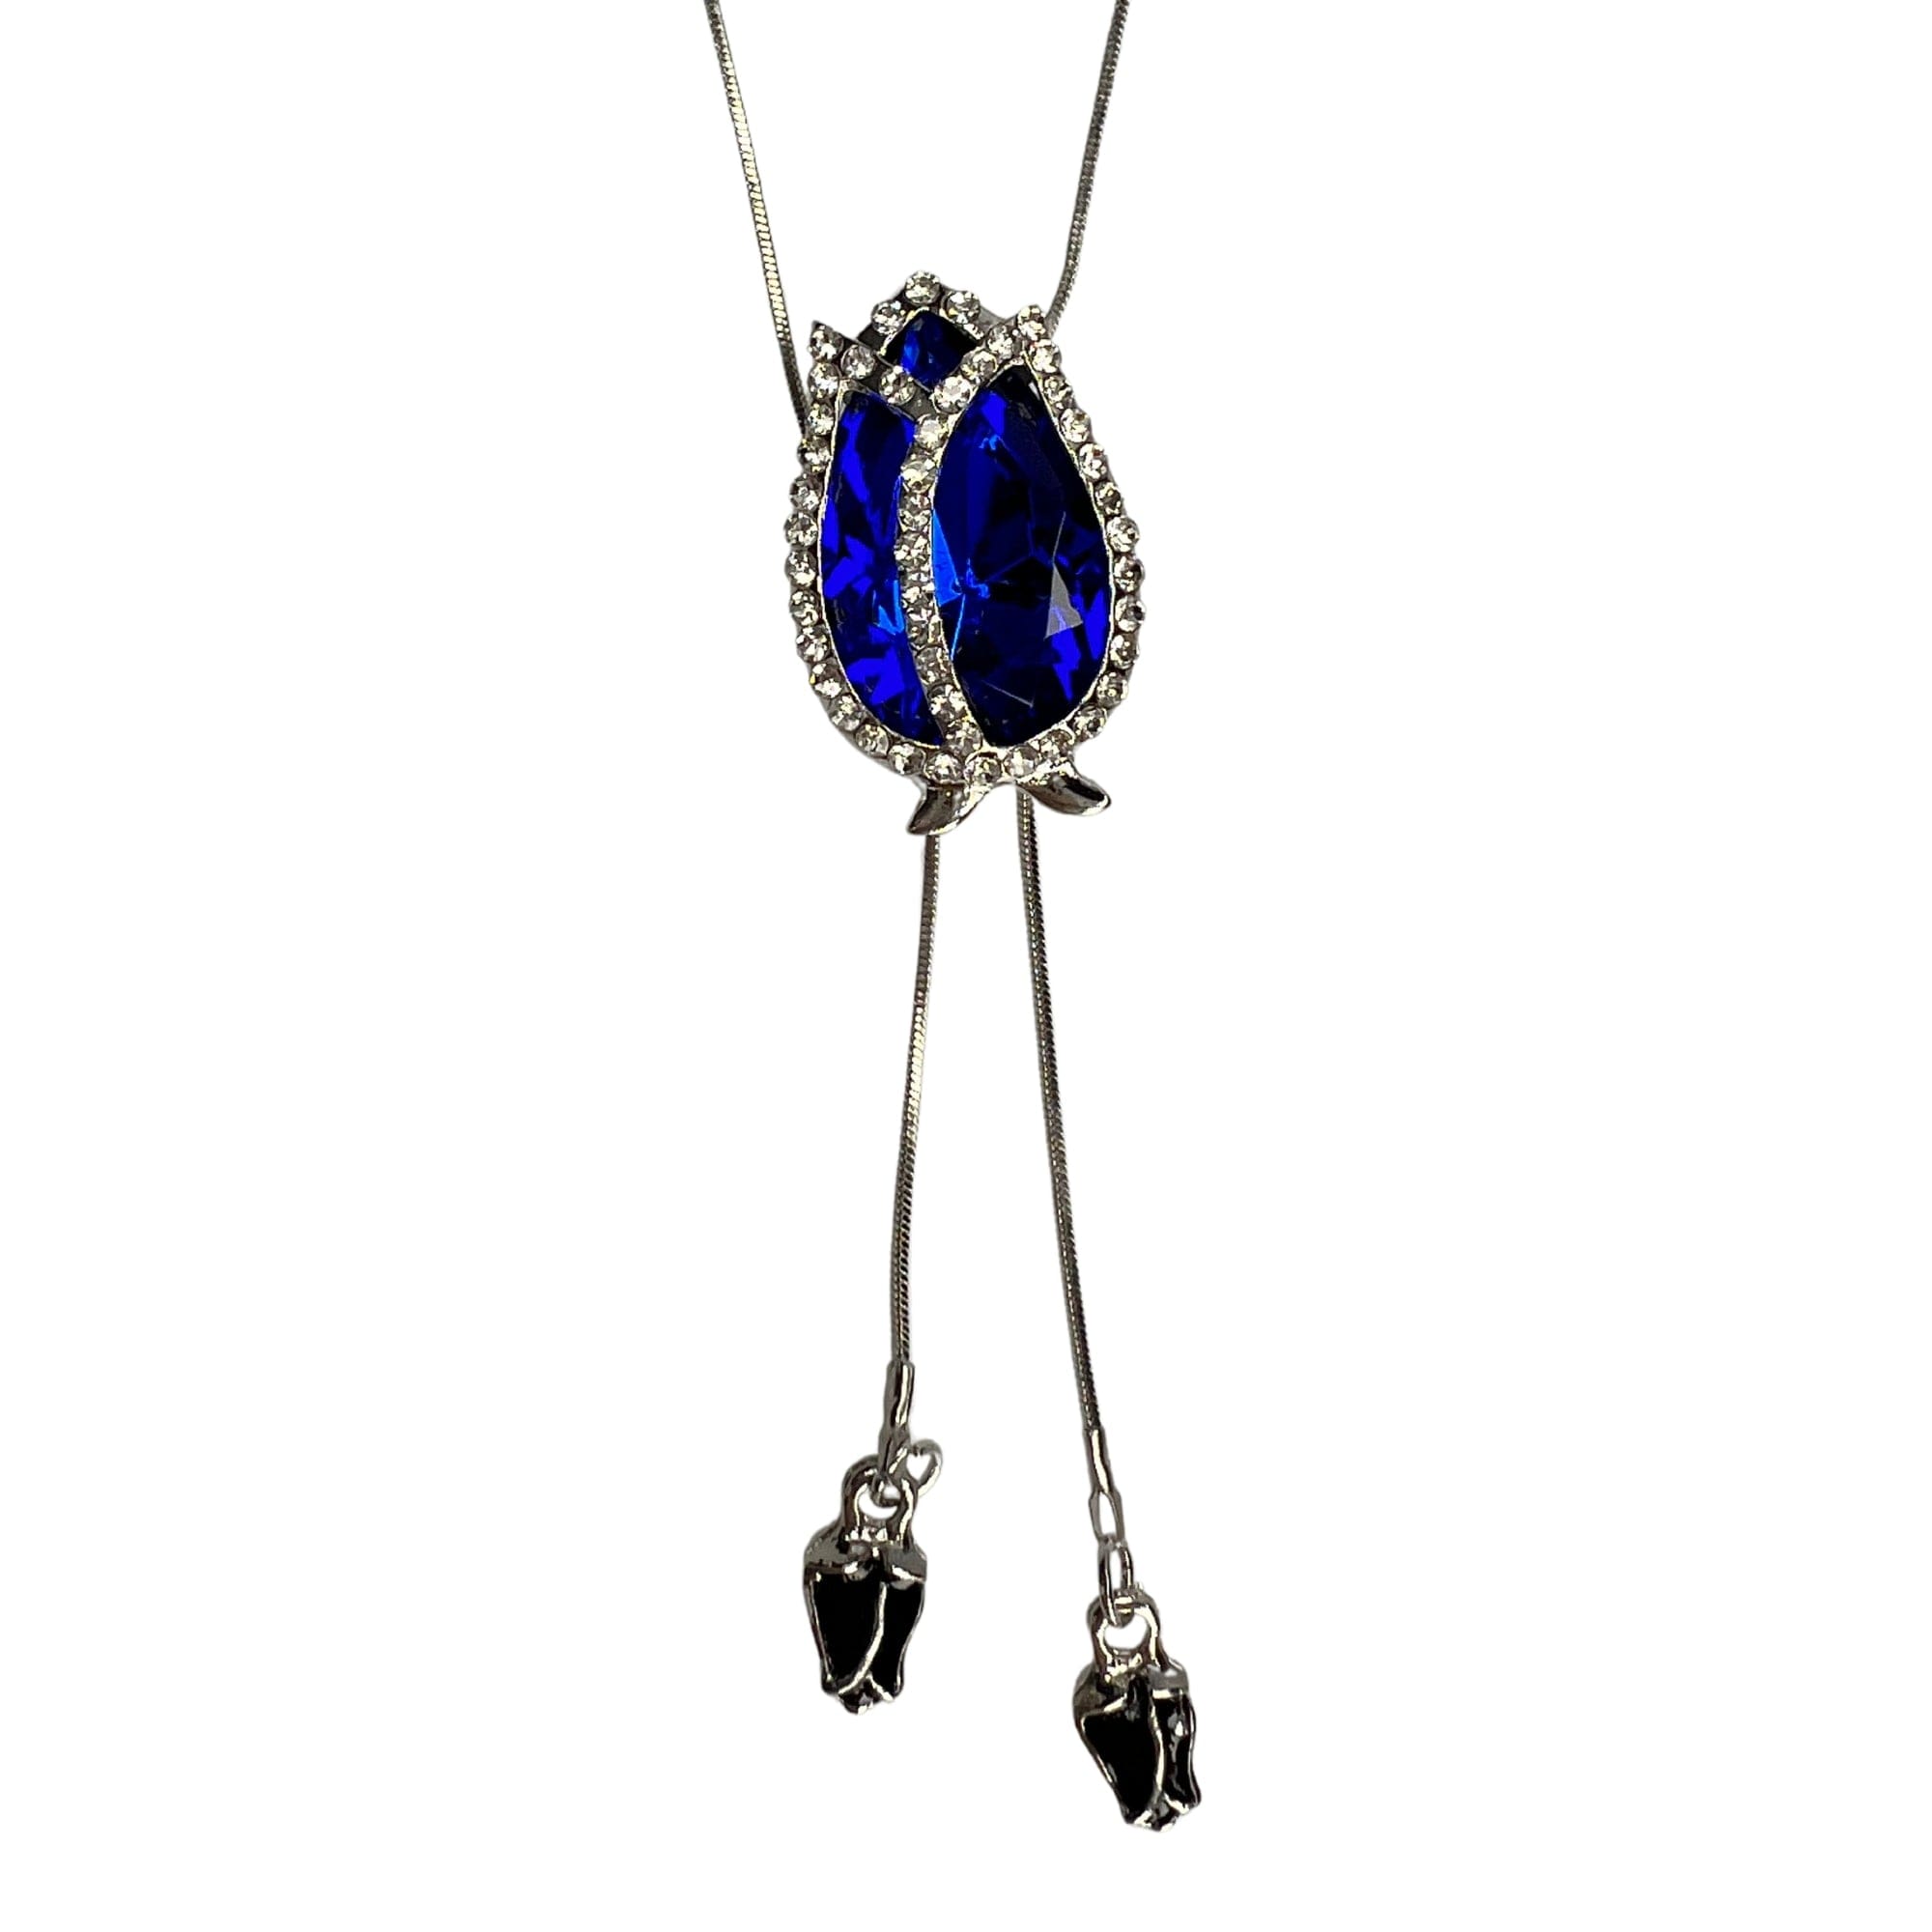 Carmen juwelenketting - Blauw - Ketting